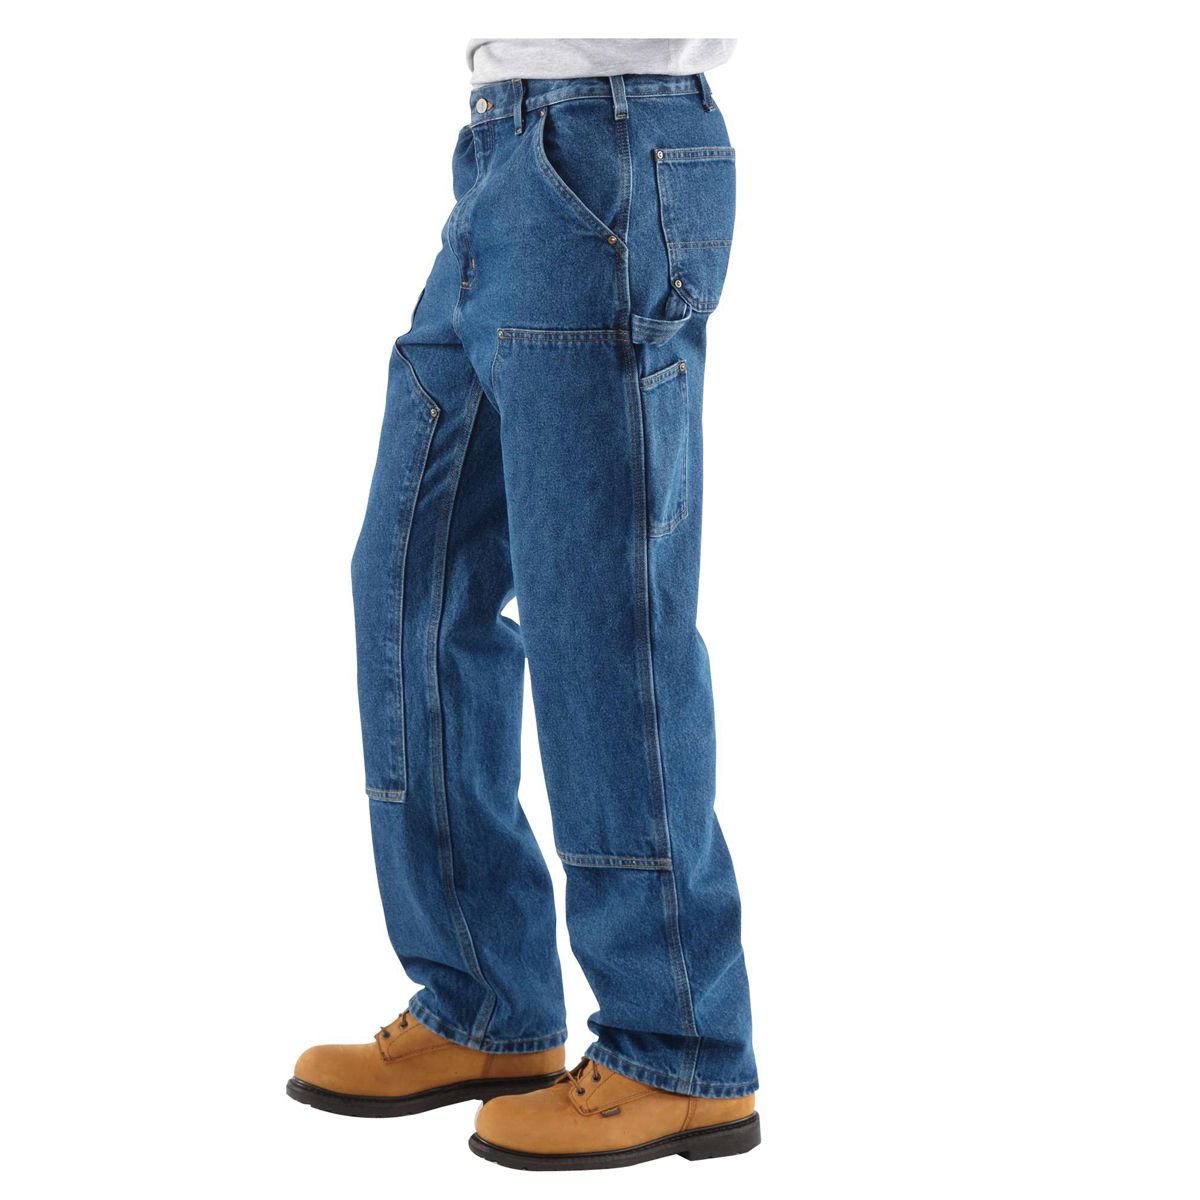 Carhartt B73-DST-32X30 Utility Logger Jeans, 32 in Waist, 30 in L Inseam, Darkstone, Loose Fit - 8